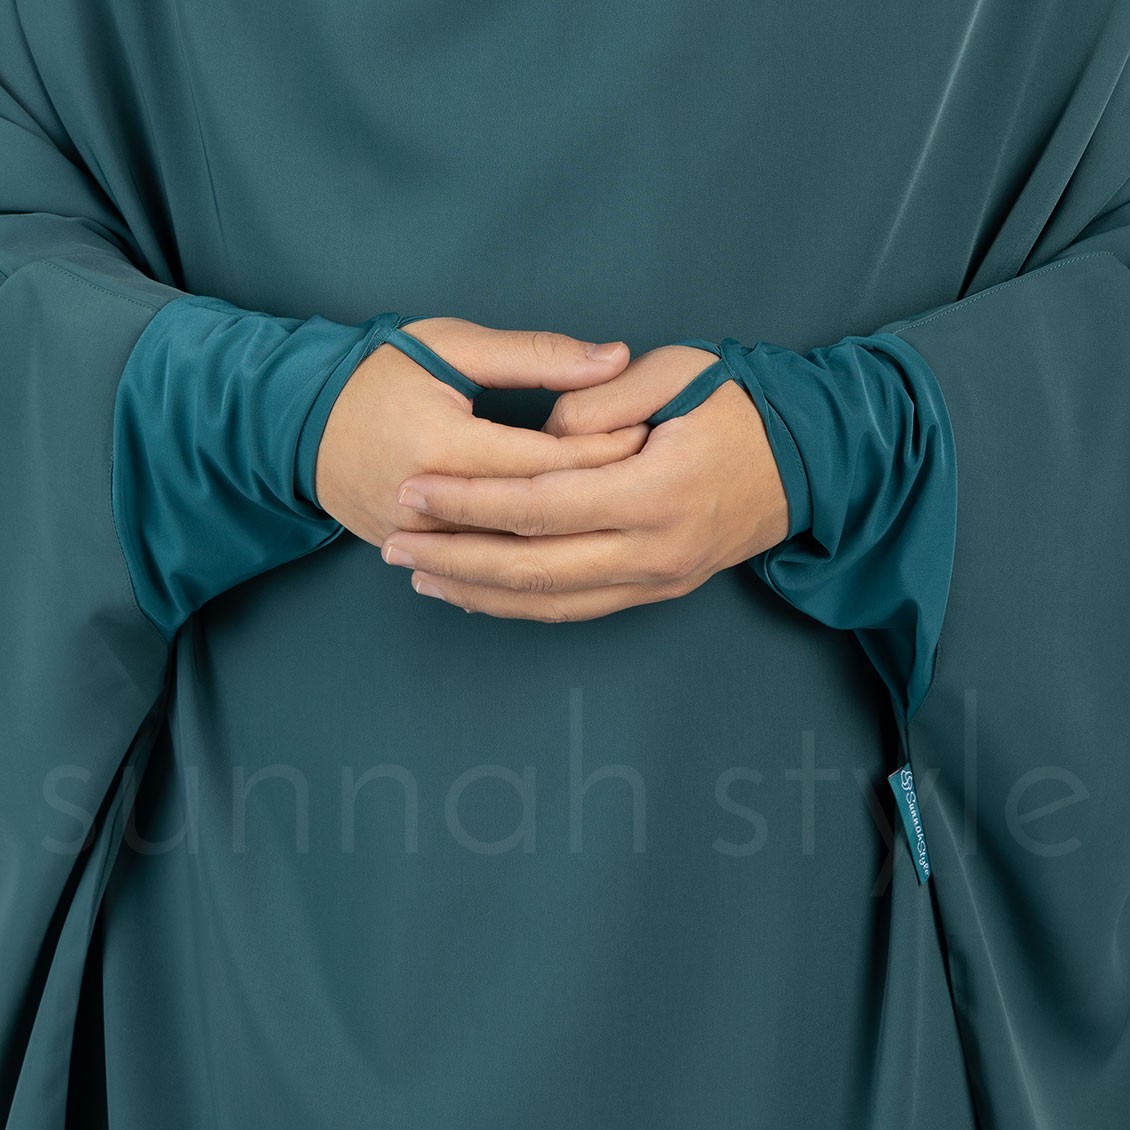 Sunnah Style Signature Jilbab Top Knee Length Teal